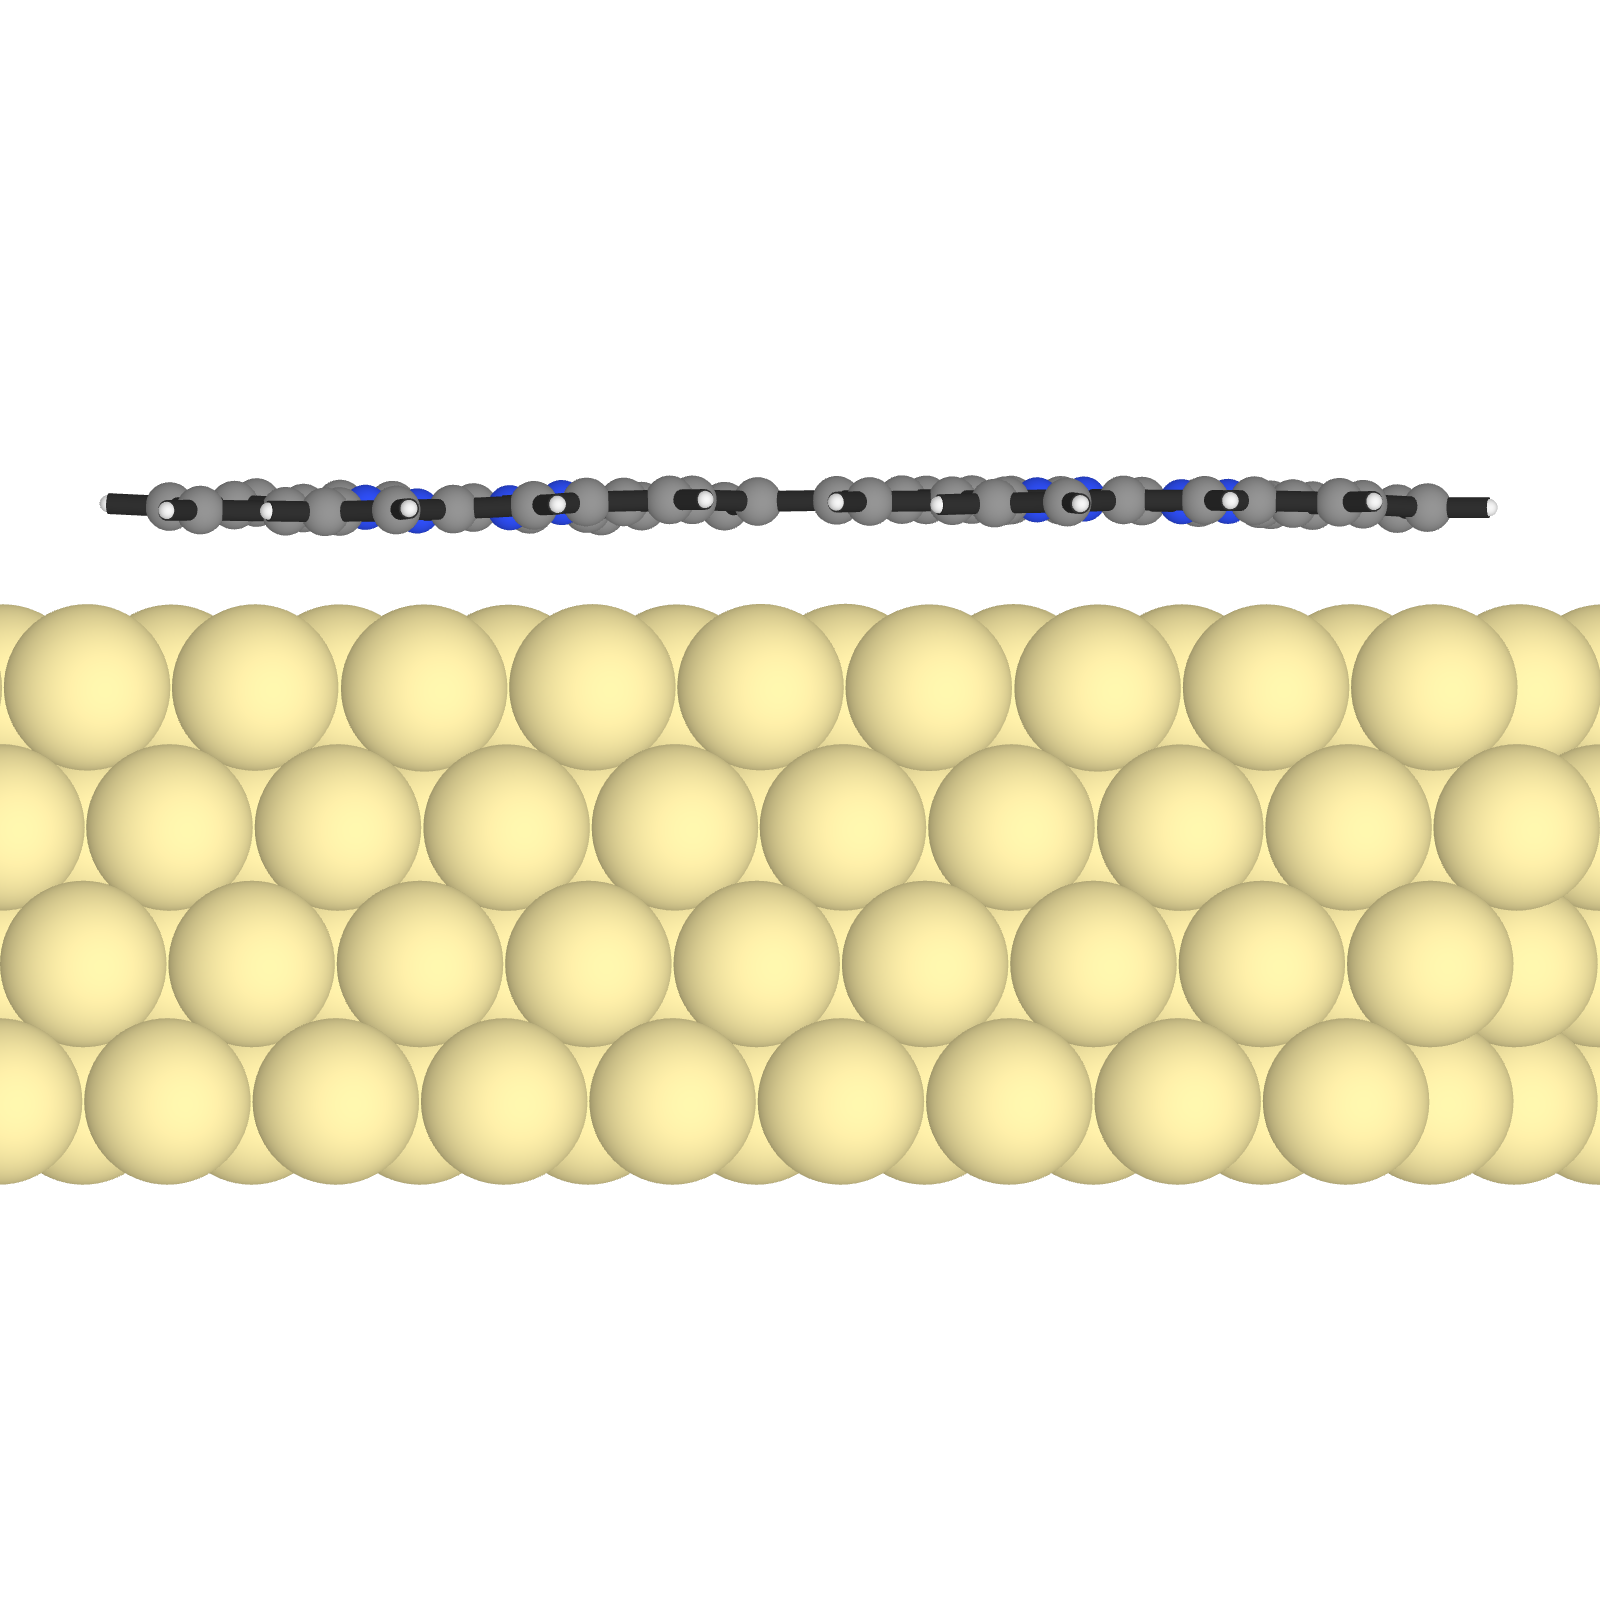 Molecule visualization side view